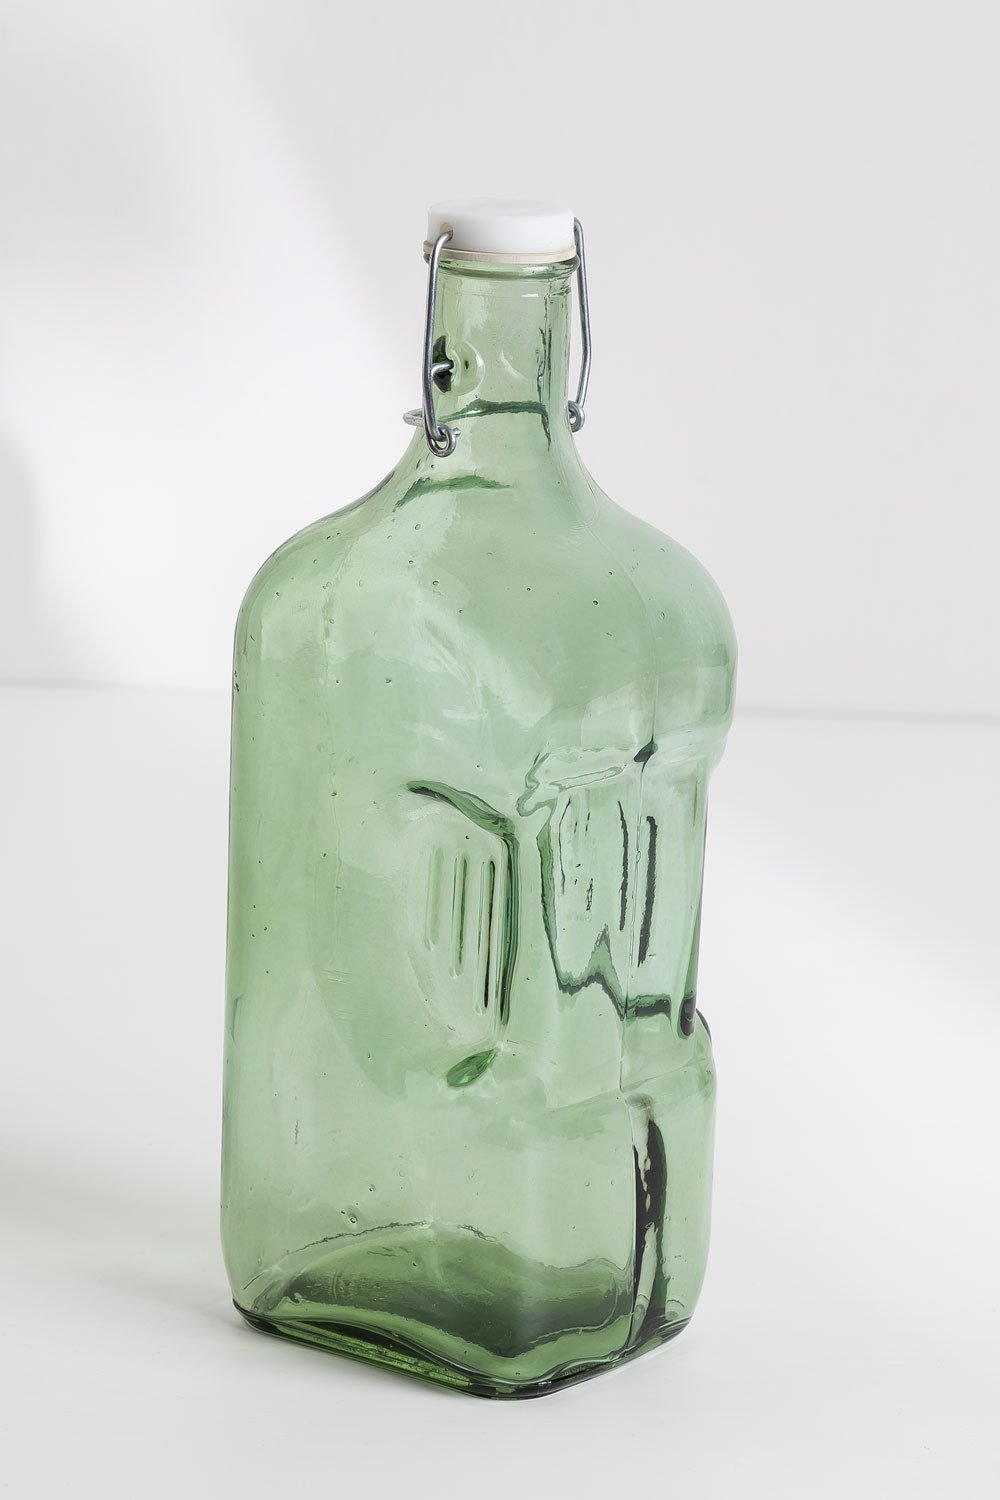 Botella 2 L de Vidrio Reciclado Velma - SKLUM